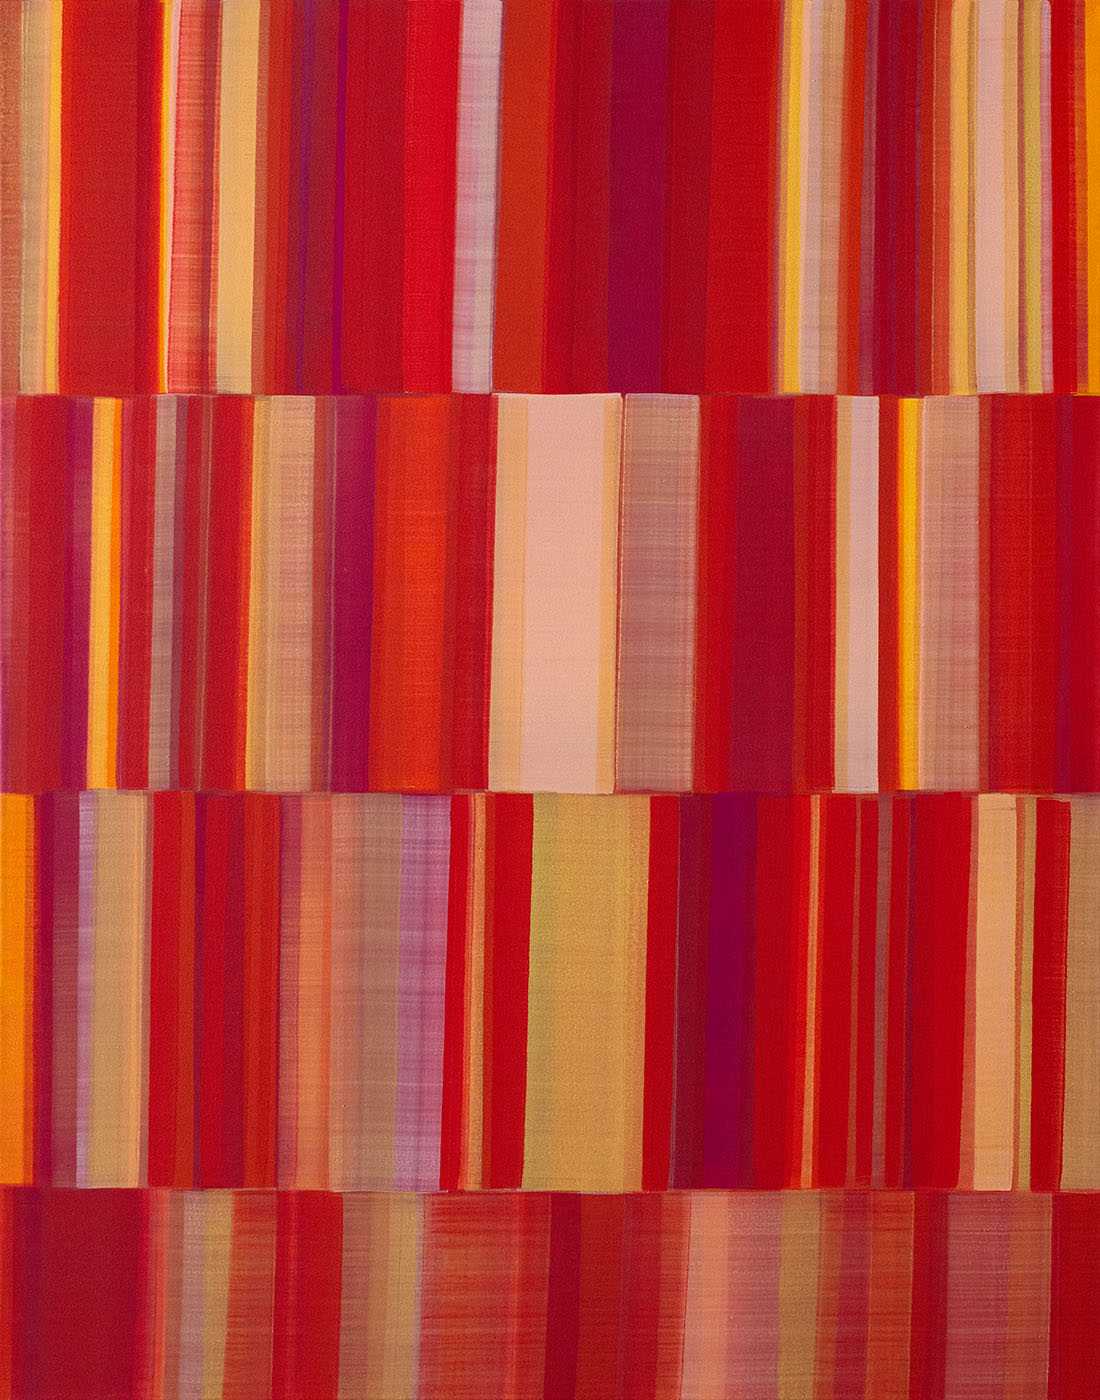 Nikola Dimitrov, KlangRaumRot IV, 2017, Pigmente, Bindemittel, Lösungsmittel auf Leinwand, 140 x 110 cm